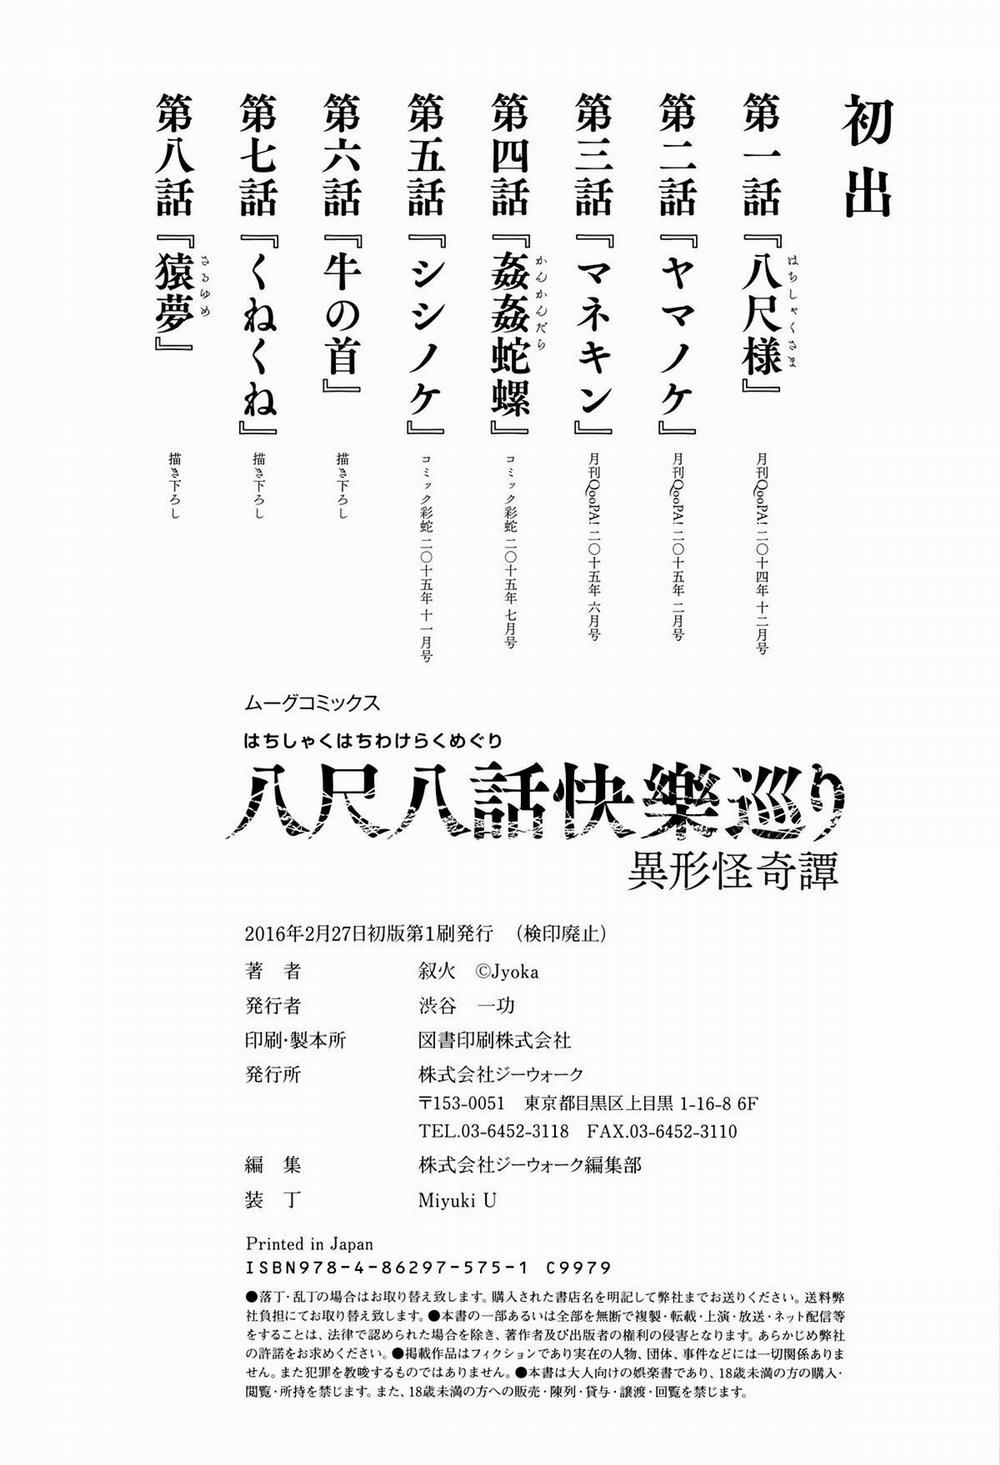 Hachishaku Hachiwa Keraku Meguri Chương 8 END Trang 28